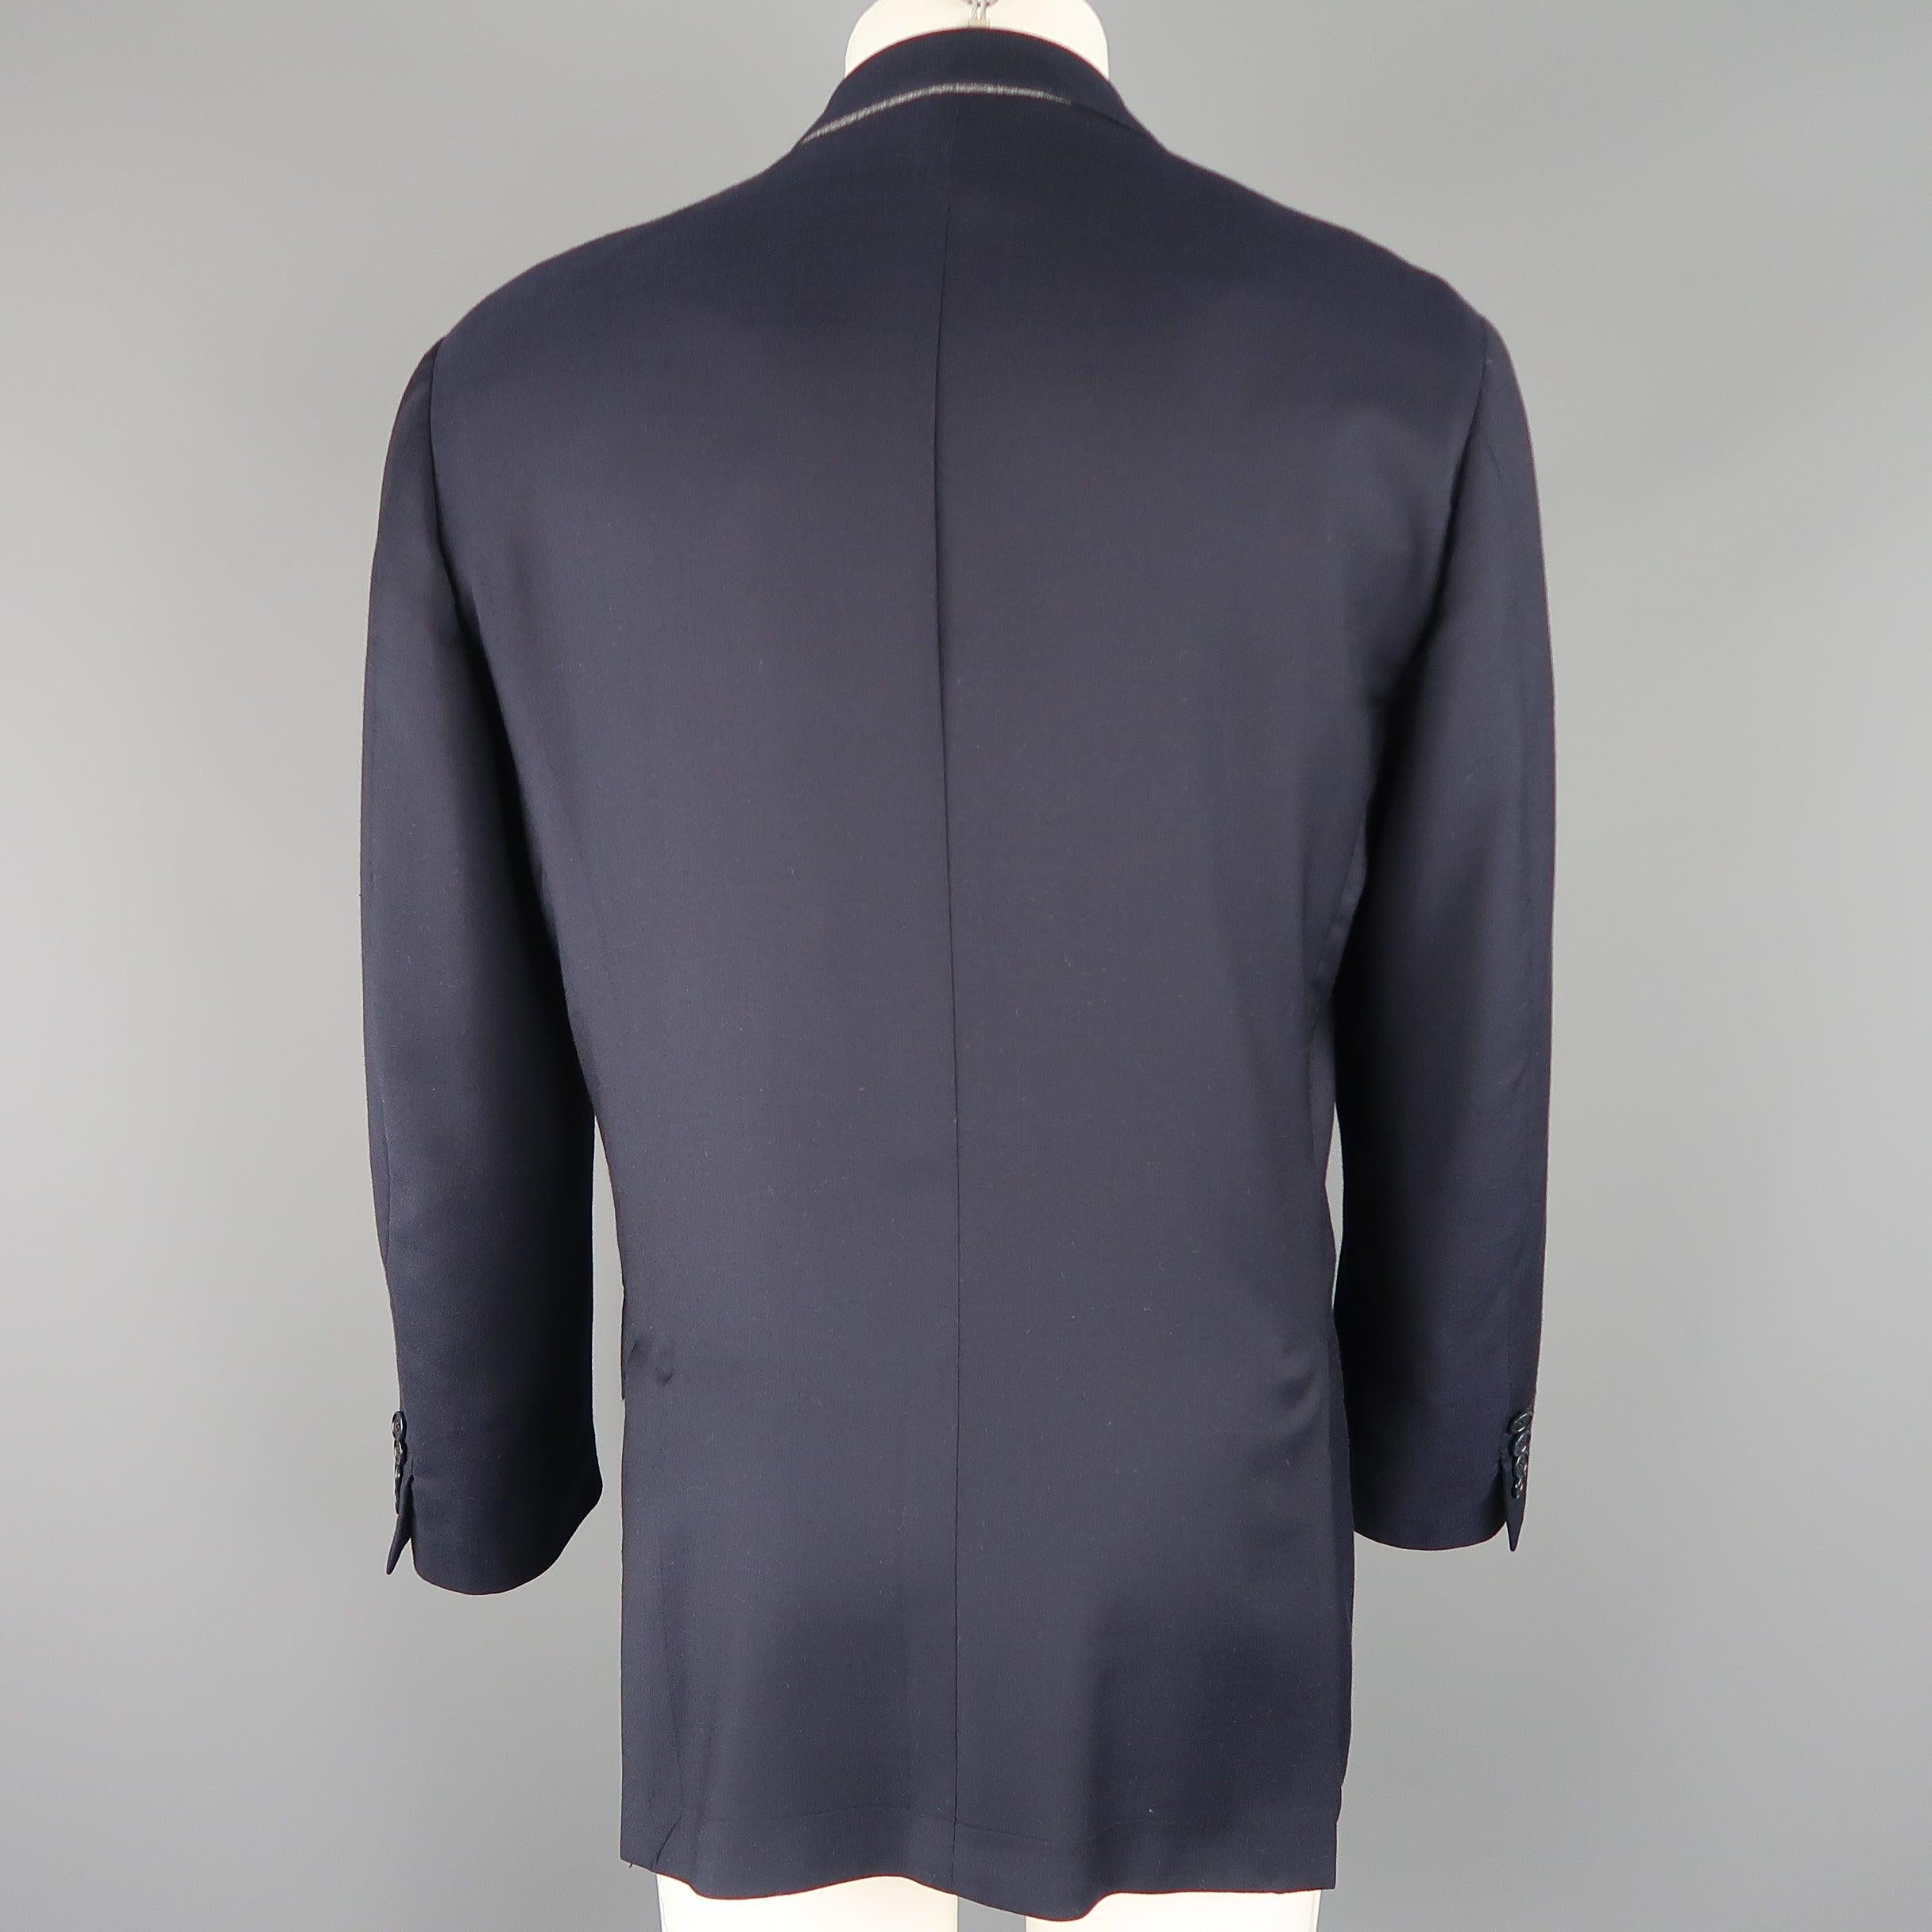 Men's ERMENEGILDO ZEGNA 44 Regular Navy Solid Wool Notch Lapel Sport Coat